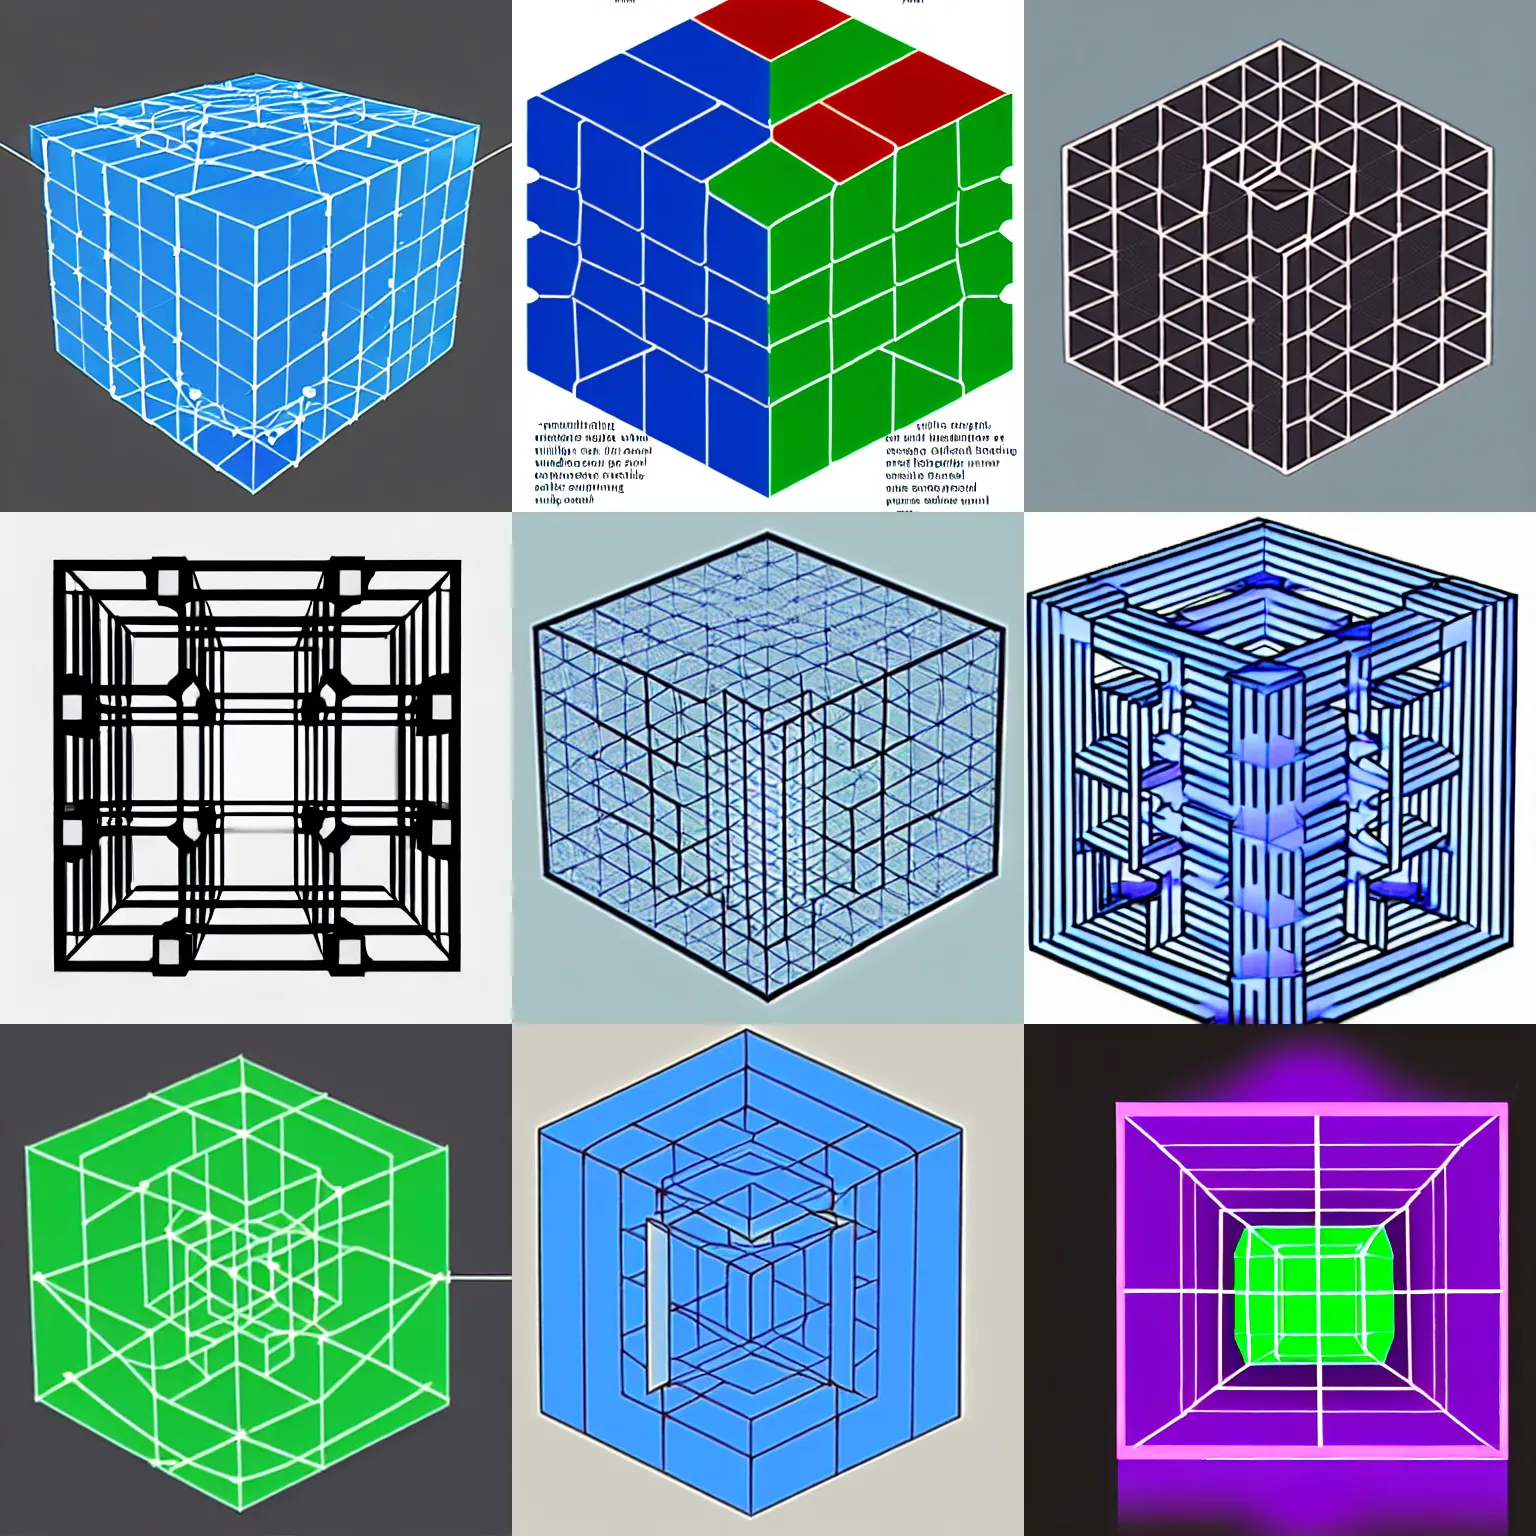 Prompt: a diagram of a 4 - dimensional hypercube